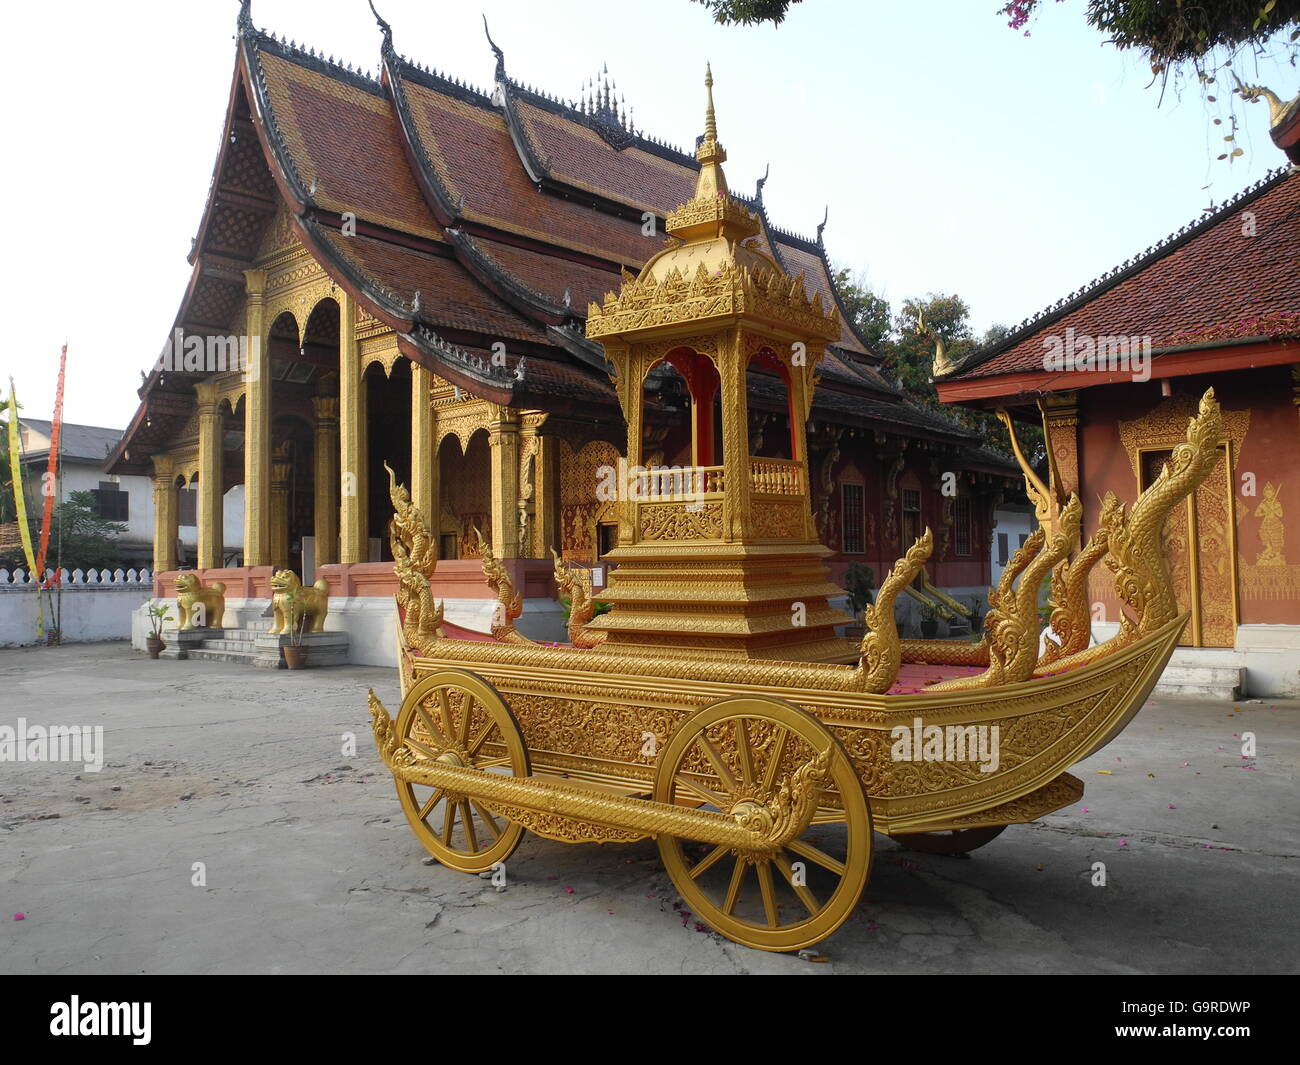 Templo budista y ritual, autocar, transporte, provincia de Luang Prabang, Laos, Luang Prabang / Asia Foto de stock